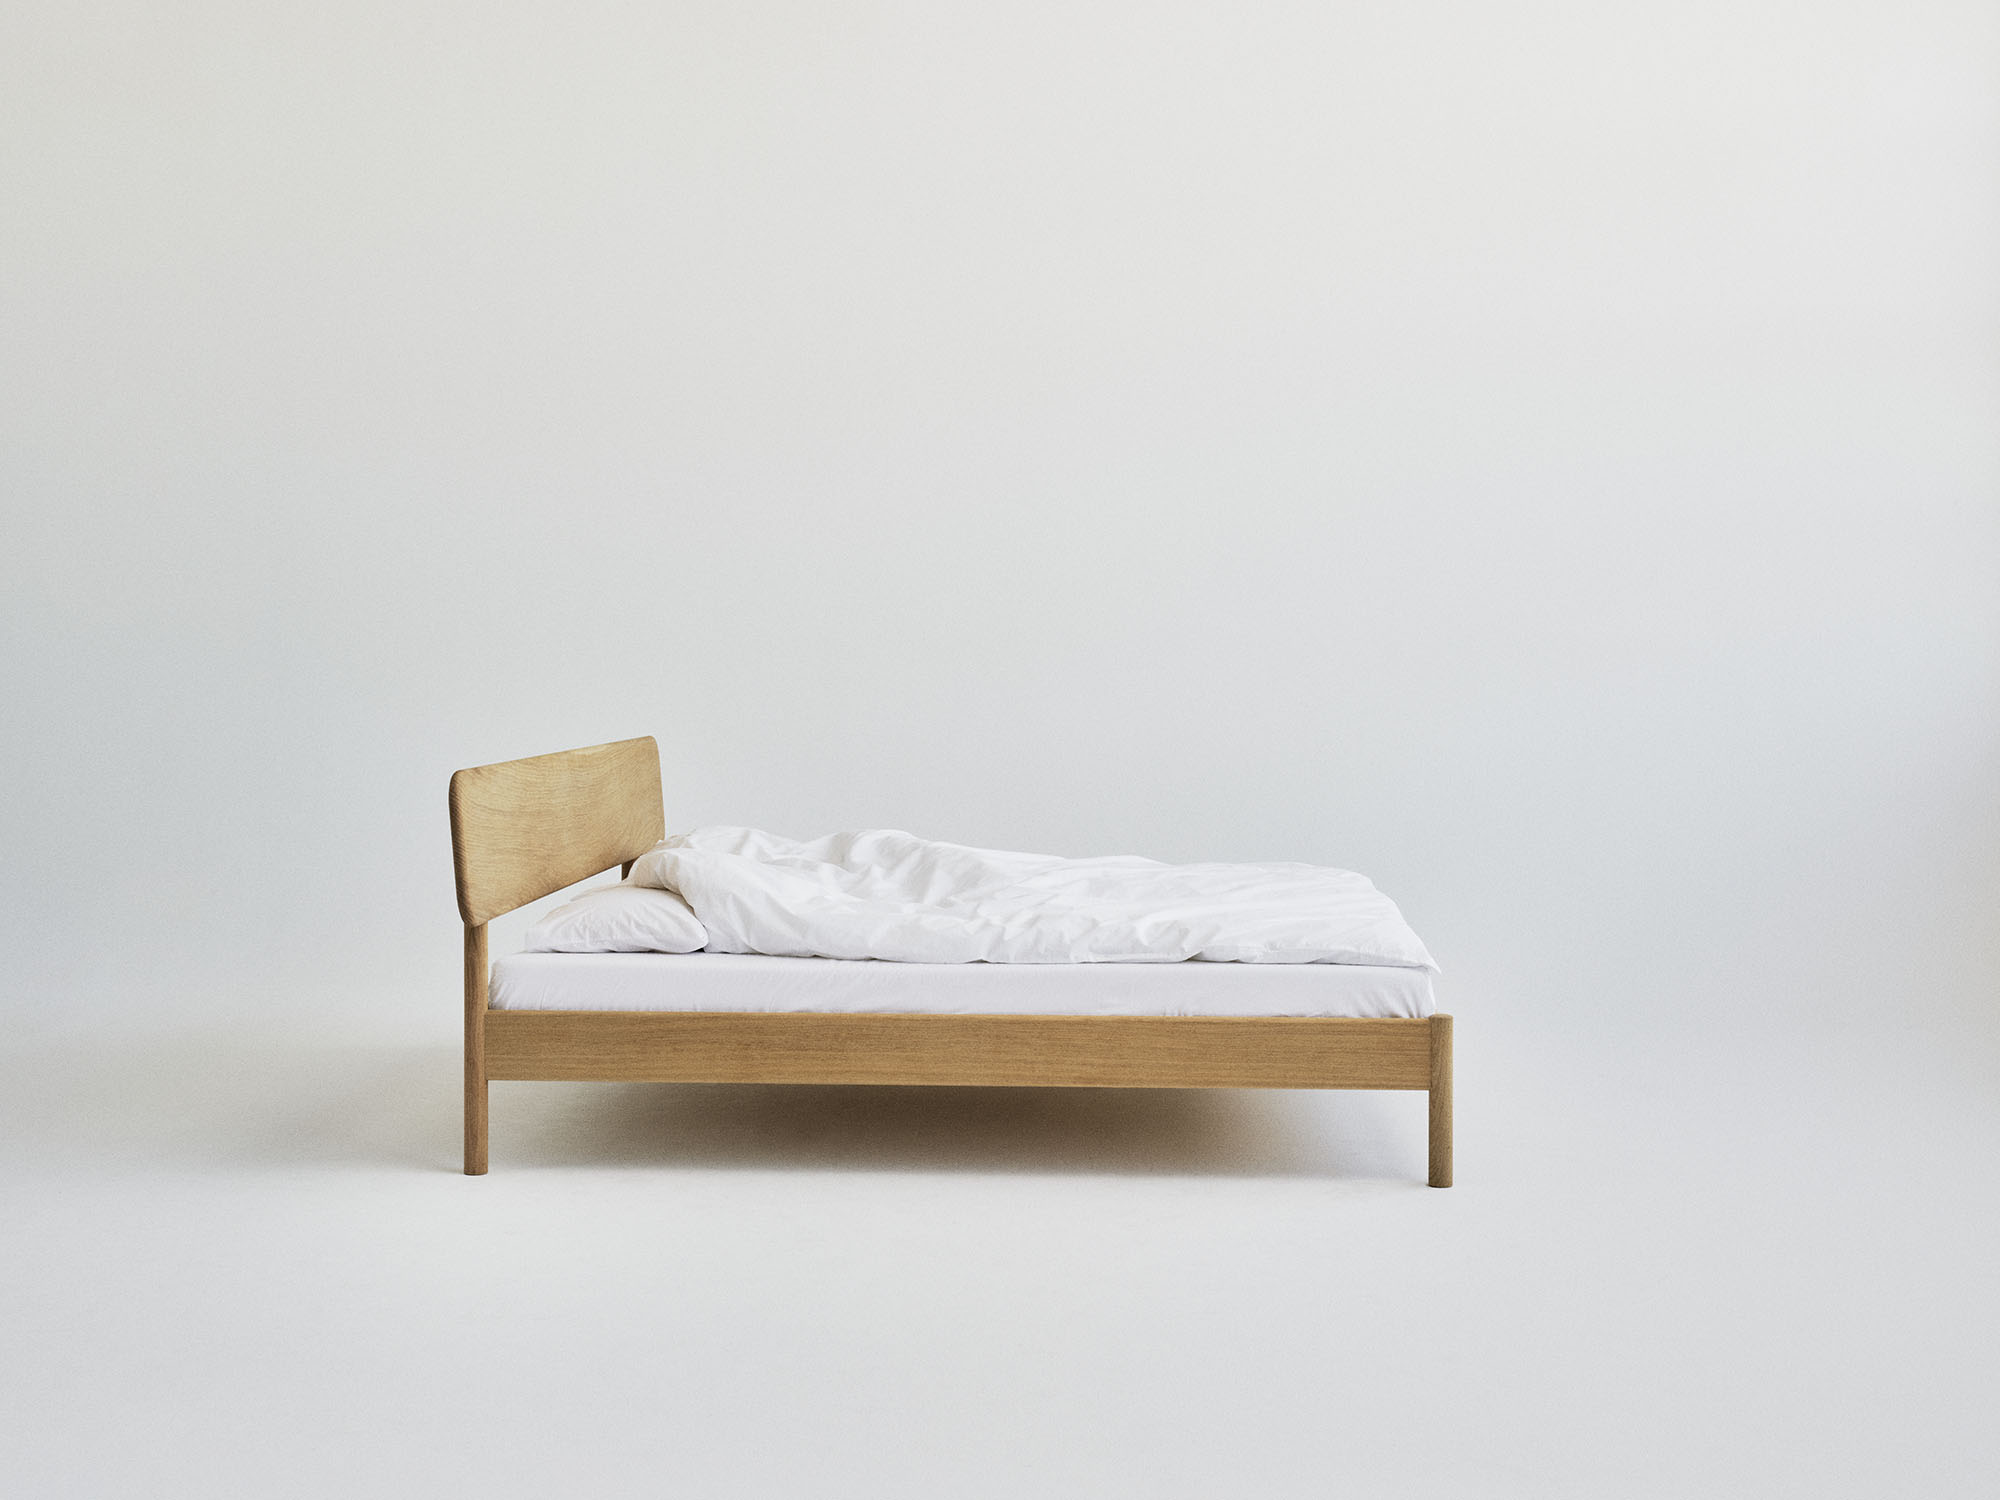 RYE Alken bed frame in oiled solid oak - side view pack shot